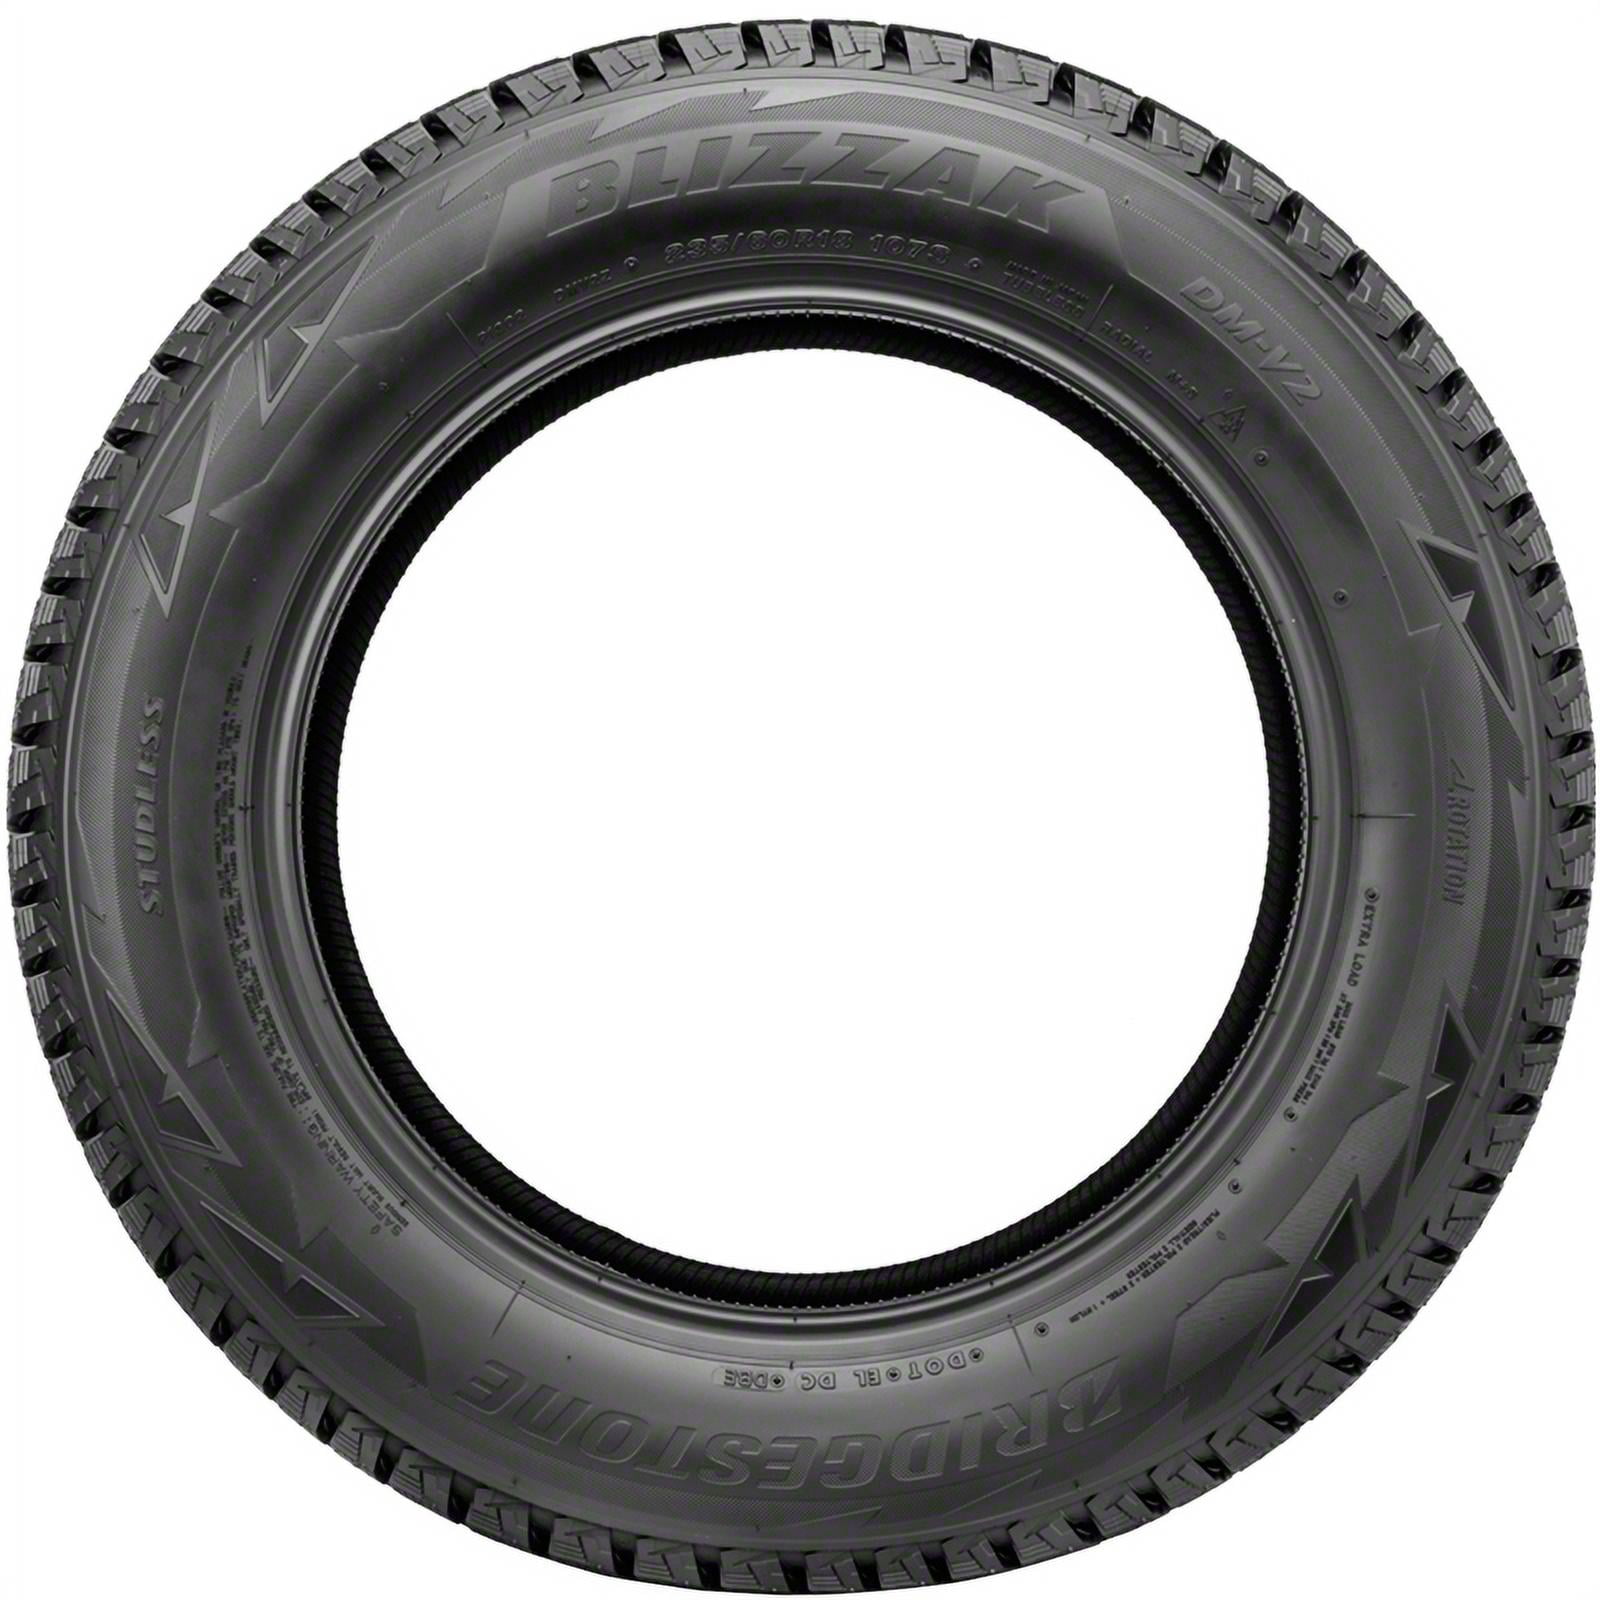 Bridgestone Blizzak DM-V2 225/70-16 103 S Tire